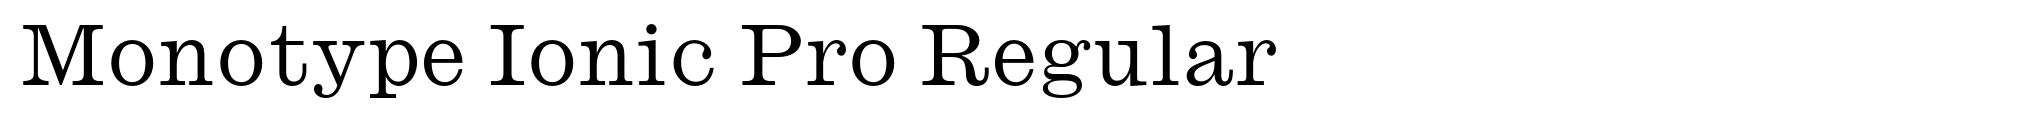 Monotype Ionic Pro Regular image